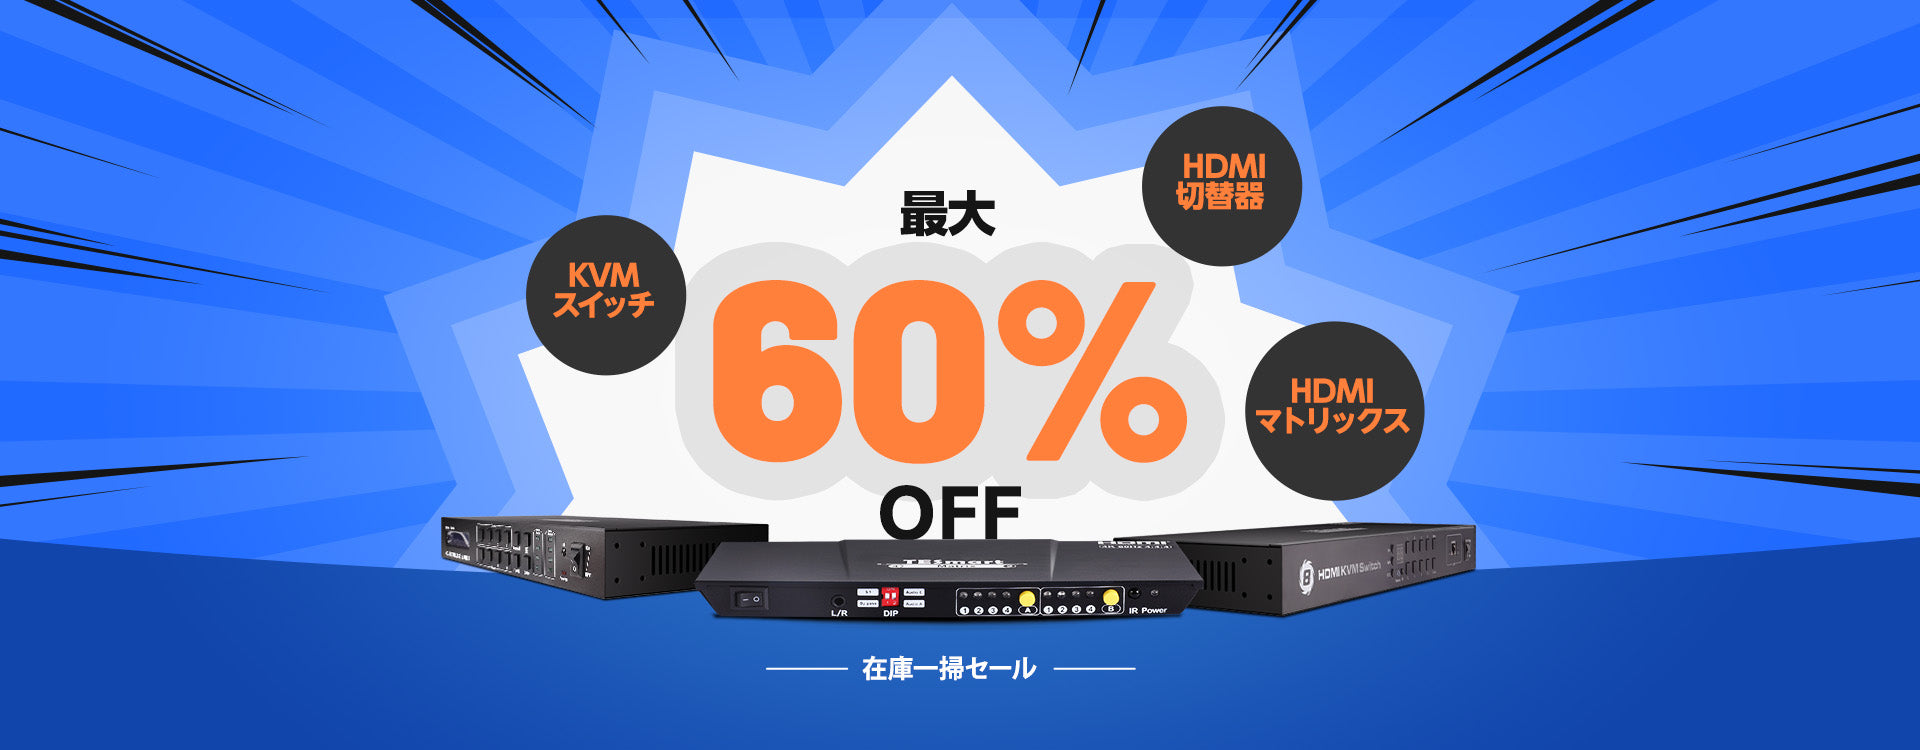 KVM スイッチ、HDMI マトリックス、HDMI切替器 - TESmart Japan公式 